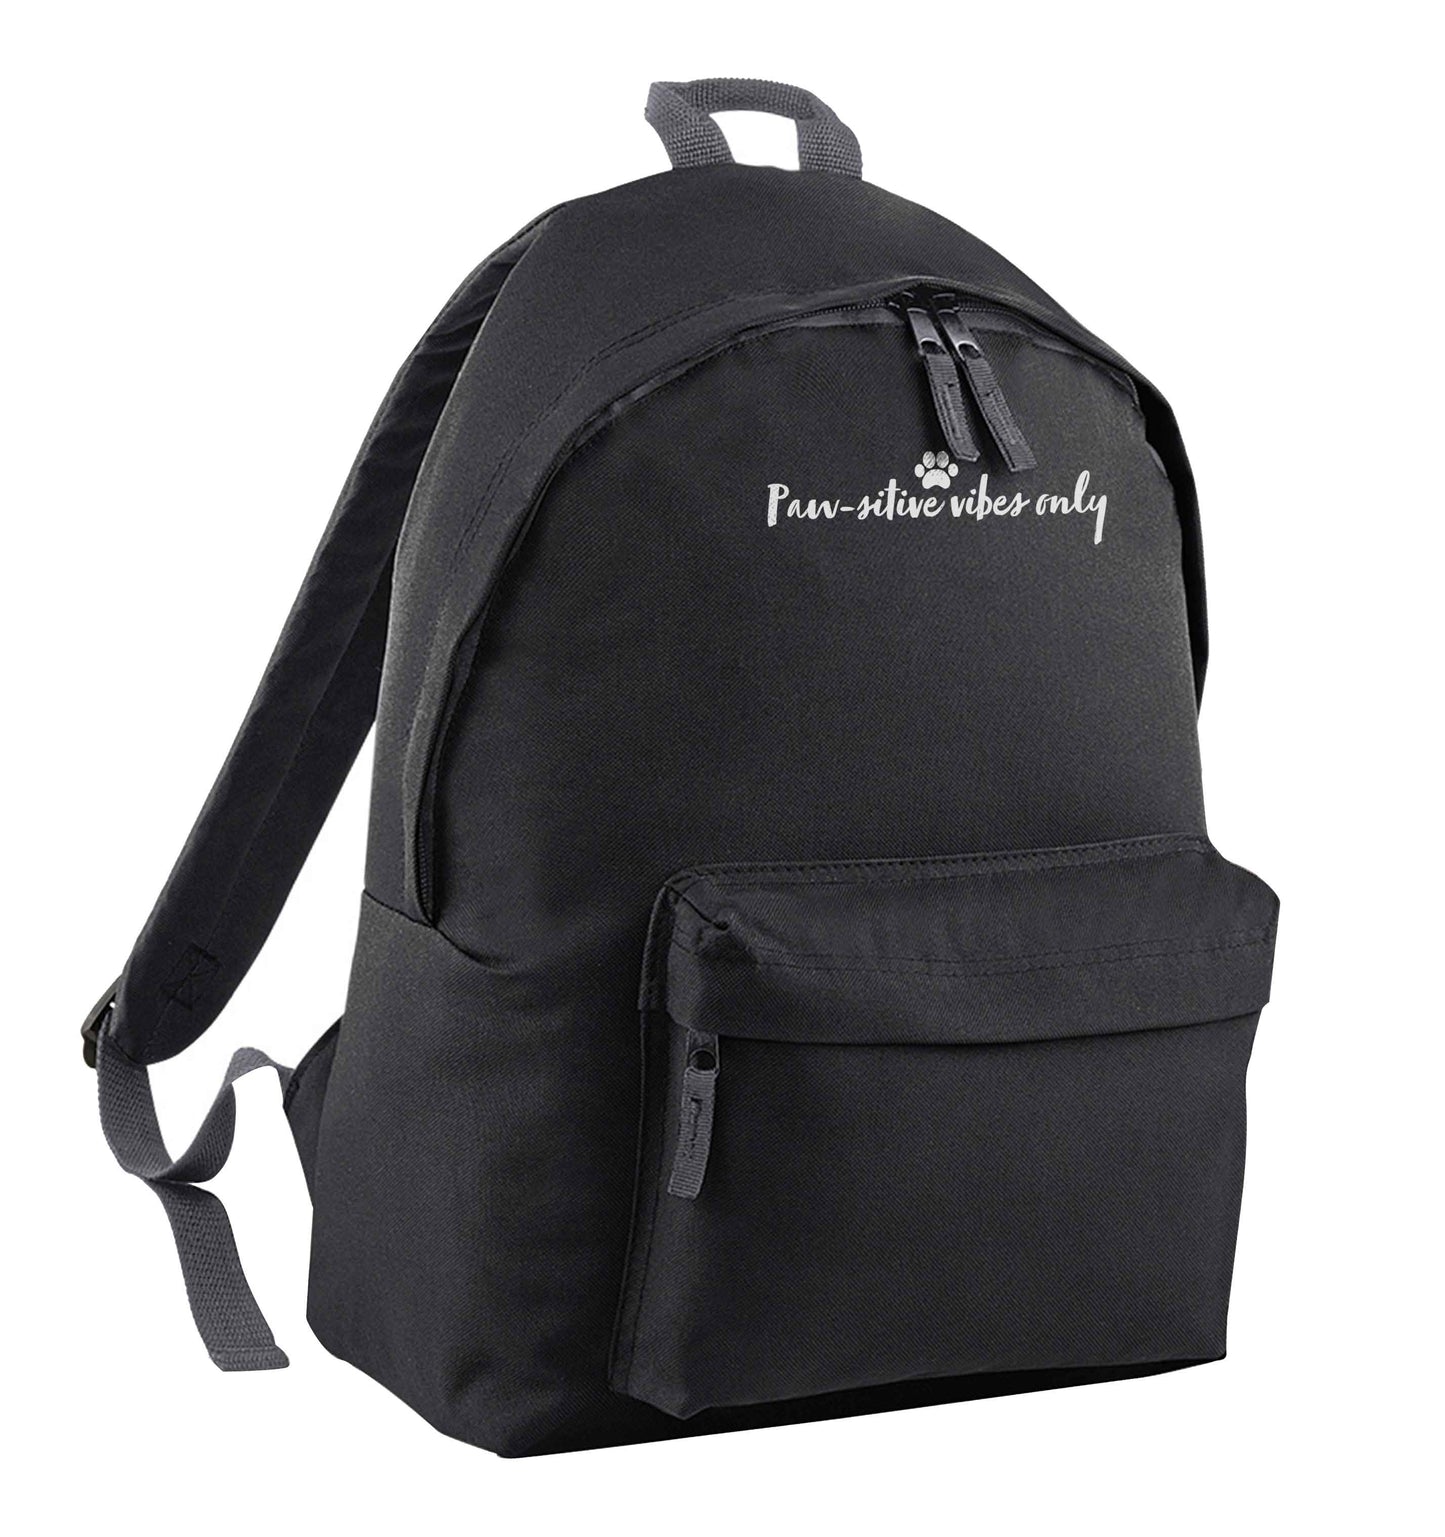 Pawsitive vibes only Kit black children's backpack